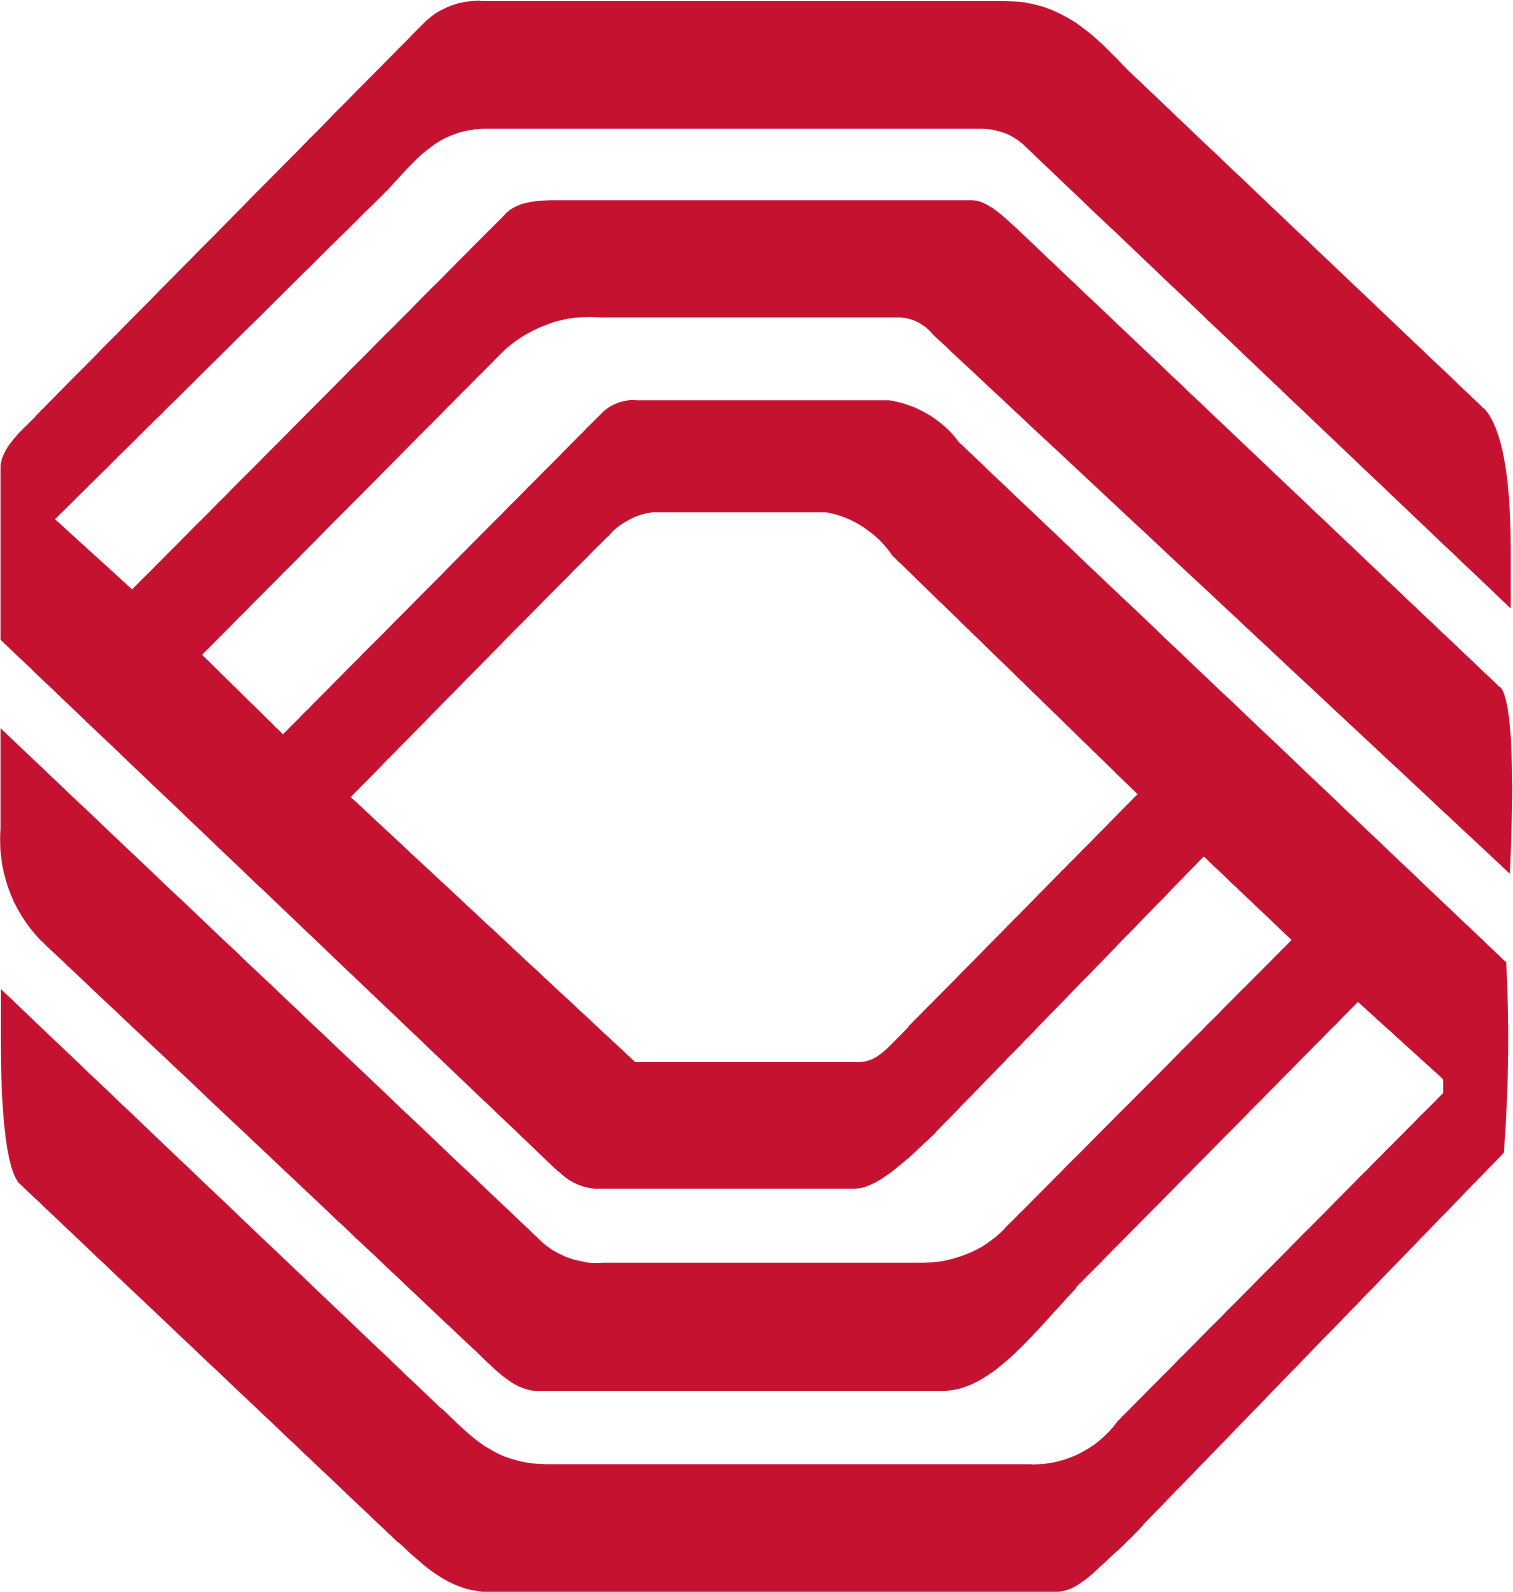 BOK Financial logo (transparent PNG)